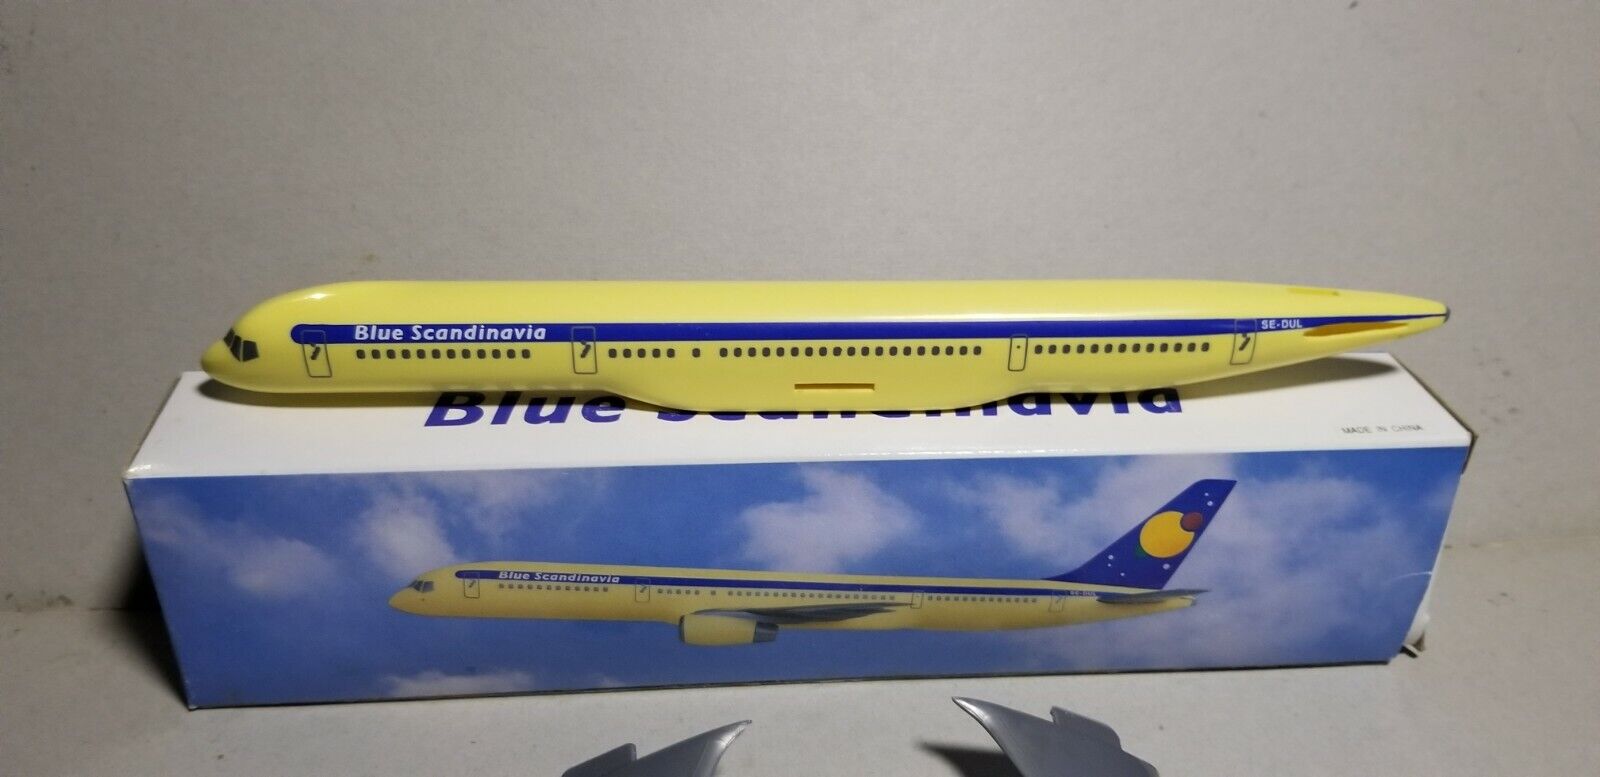 FLIGHT MINATURE  BLUE SCANDANAVIA 757-200 1:200 SCALE PLASTIC SNAPFIT MODEL